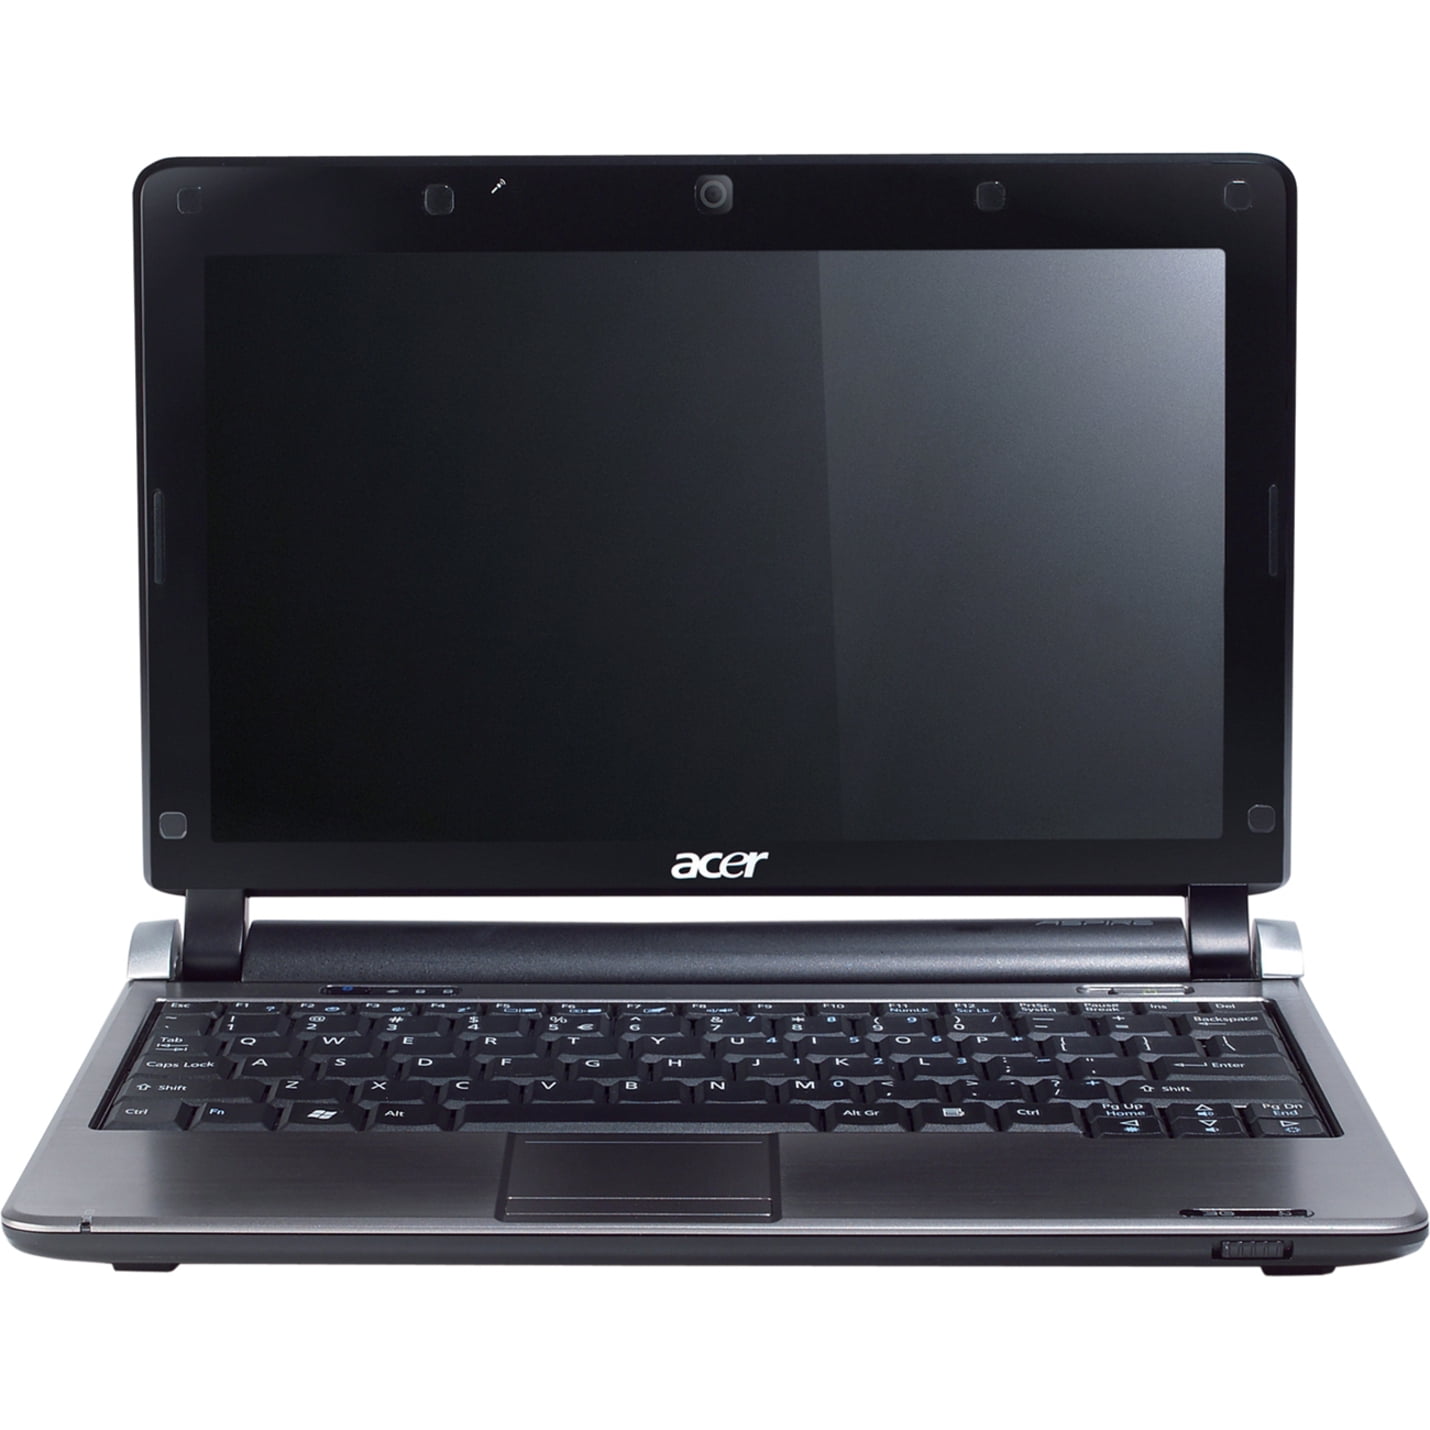 Acer Aspire One 10.1" Netbook, Intel N270, 160GB HD, Windows 7 Starter, D250-1325 -